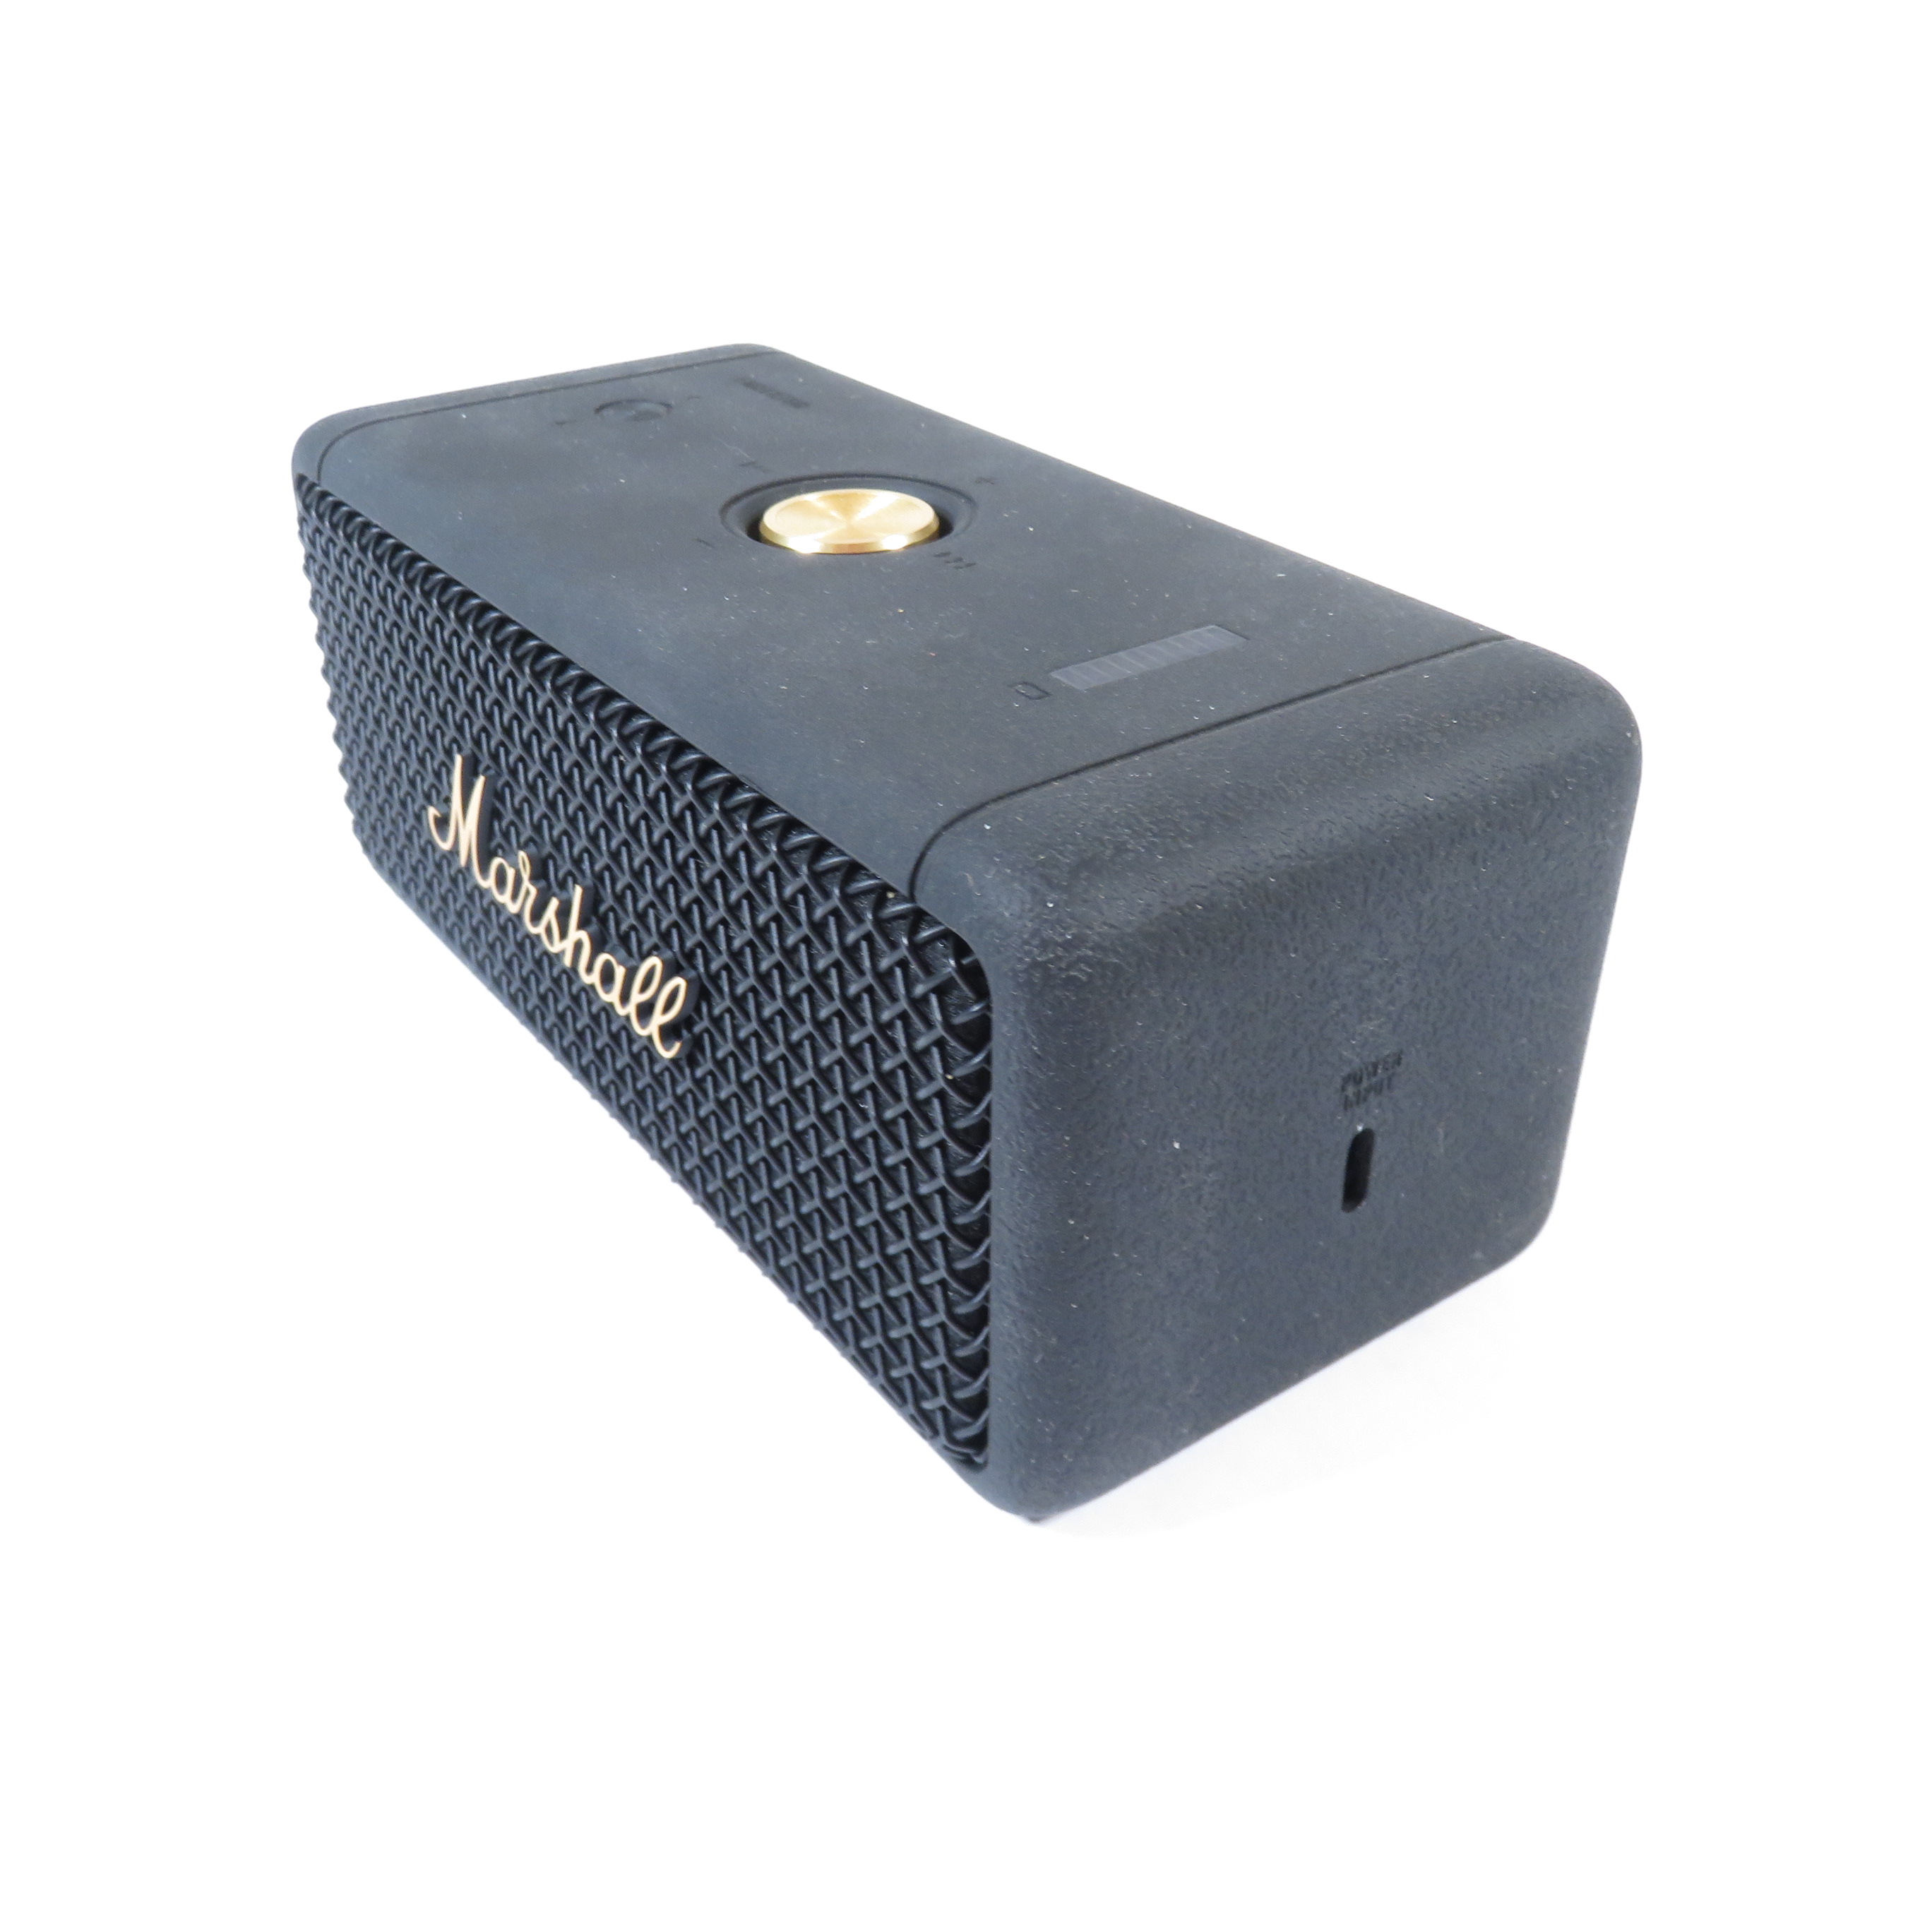  Marshall Emberton II Portable Bluetooth Speaker, Black & Brass  : Musical Instruments